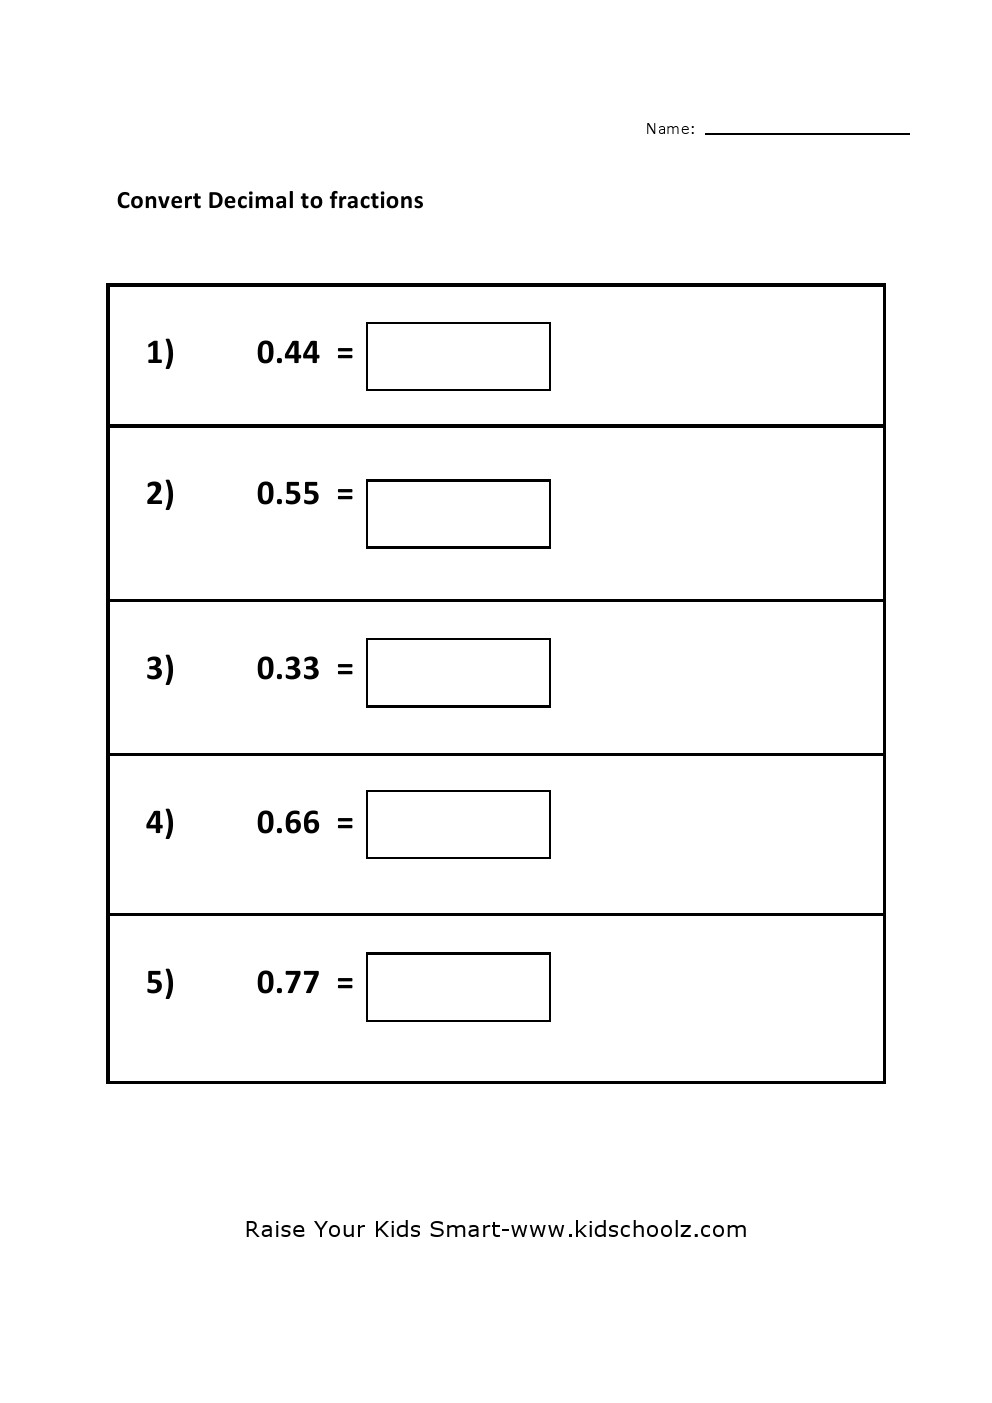 Grade 5 - Convert Decimal to Fraction Worksheet